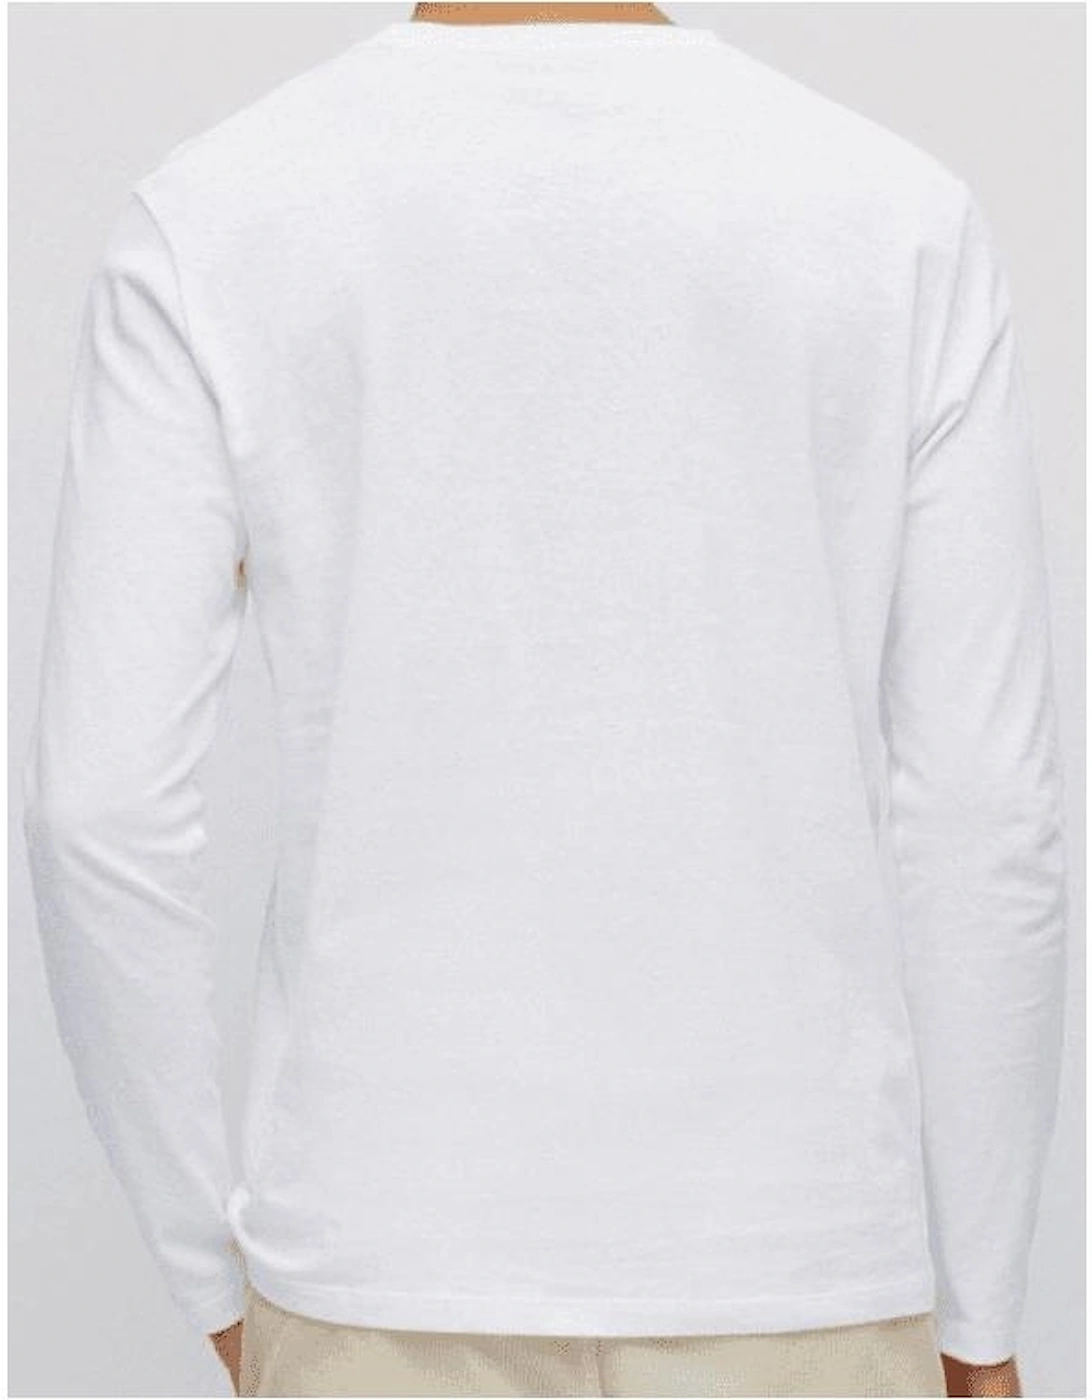 Tacks Patch Logo Long Sleeve White T-Shirt